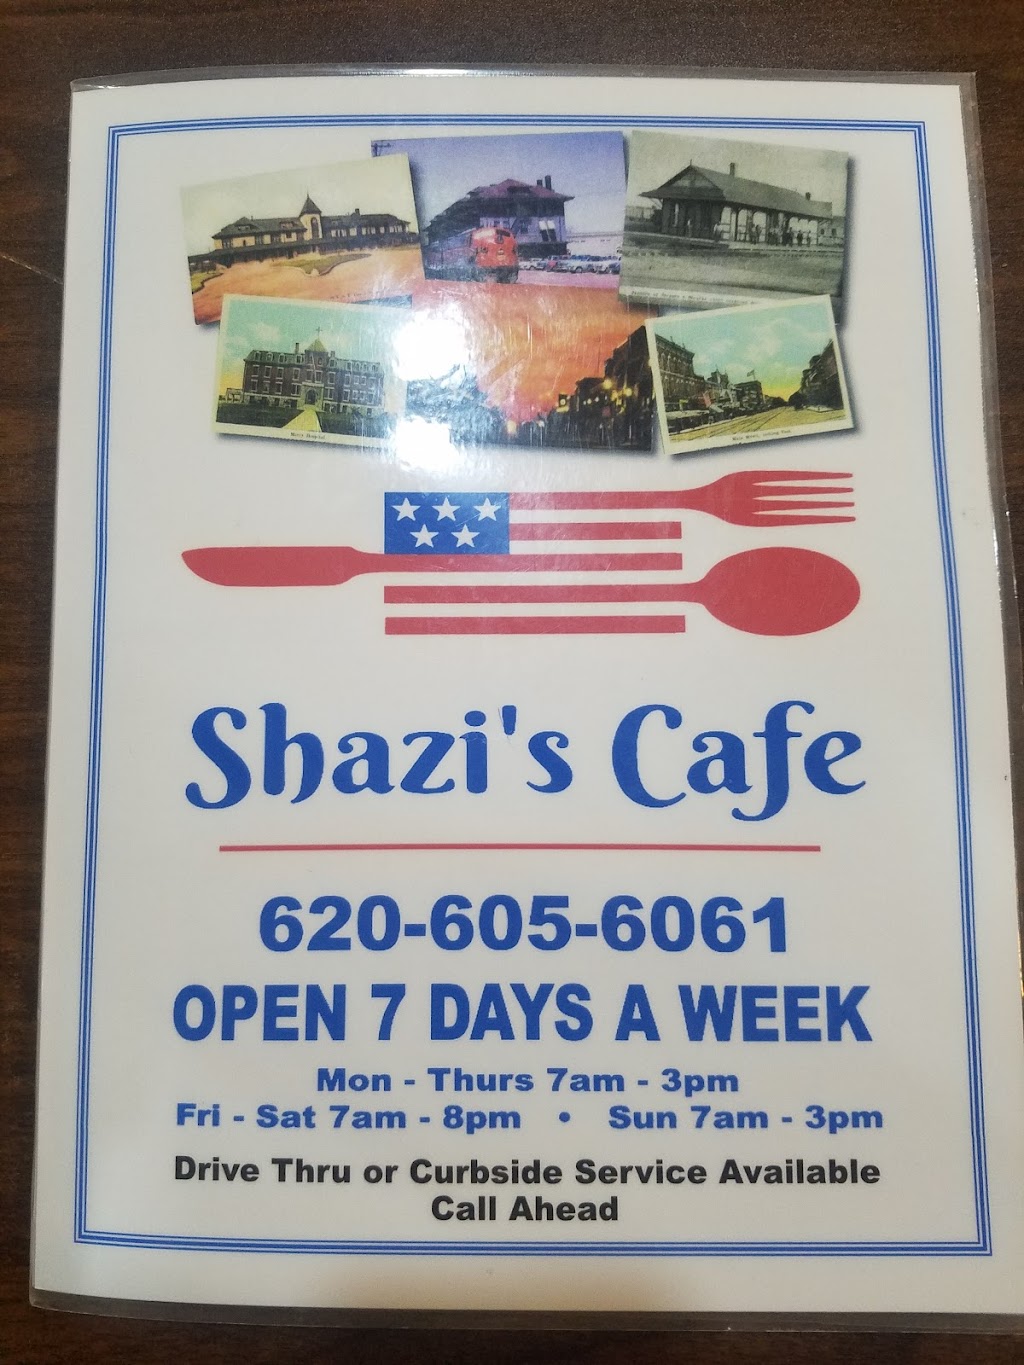 Shazis Cafe | restaurant | 1901 Crawford Ave, Parsons, KS 67357, USA | 6206056061 OR +1 620-605-6061